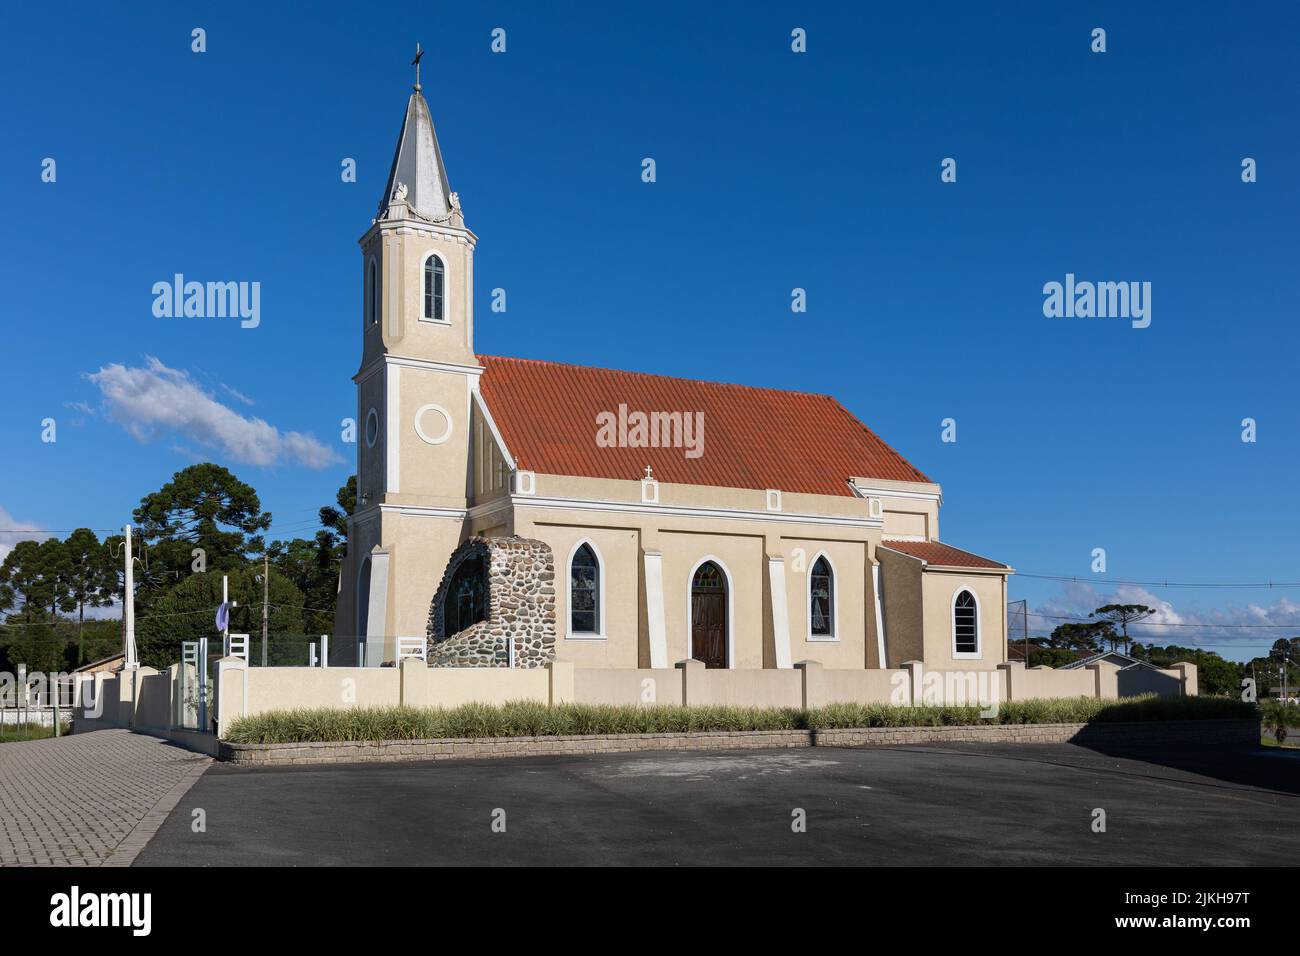 Una vista panorámica de una iglesia católica contra un cielo azul sin nubes Foto de stock